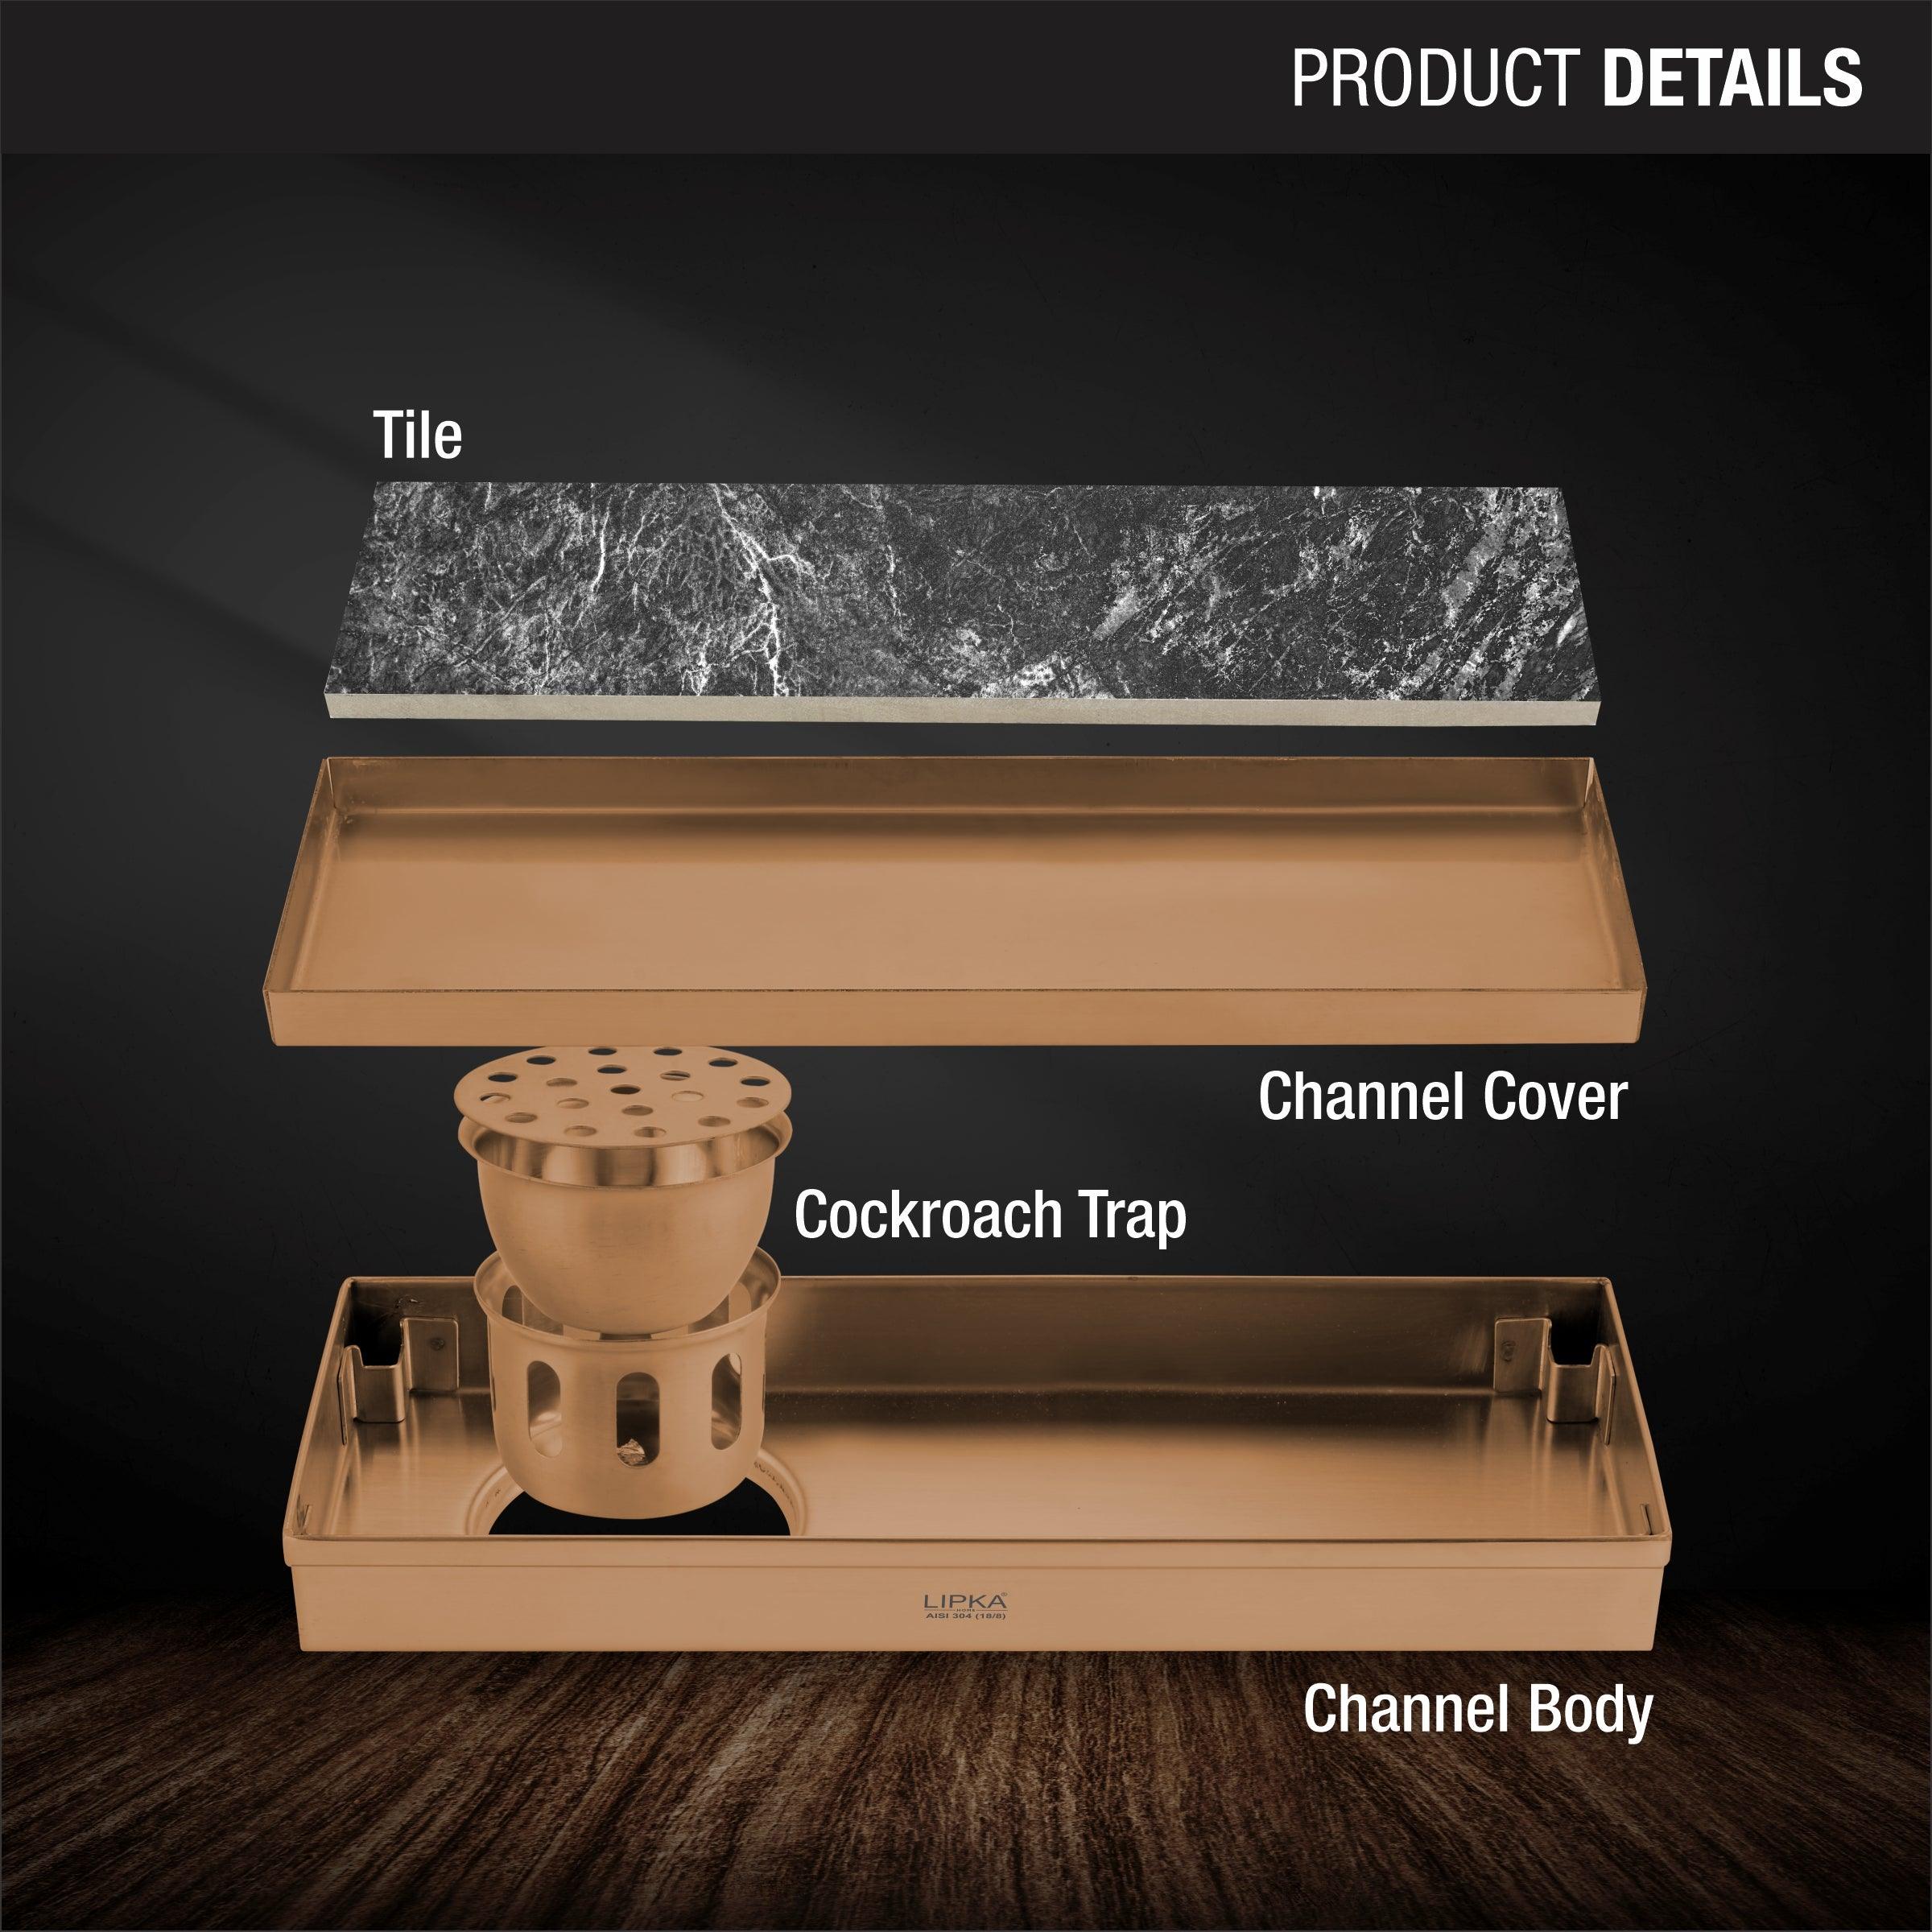 Tile Insert Shower Drain Channel - Antique Copper (18 x 4 Inches) product details